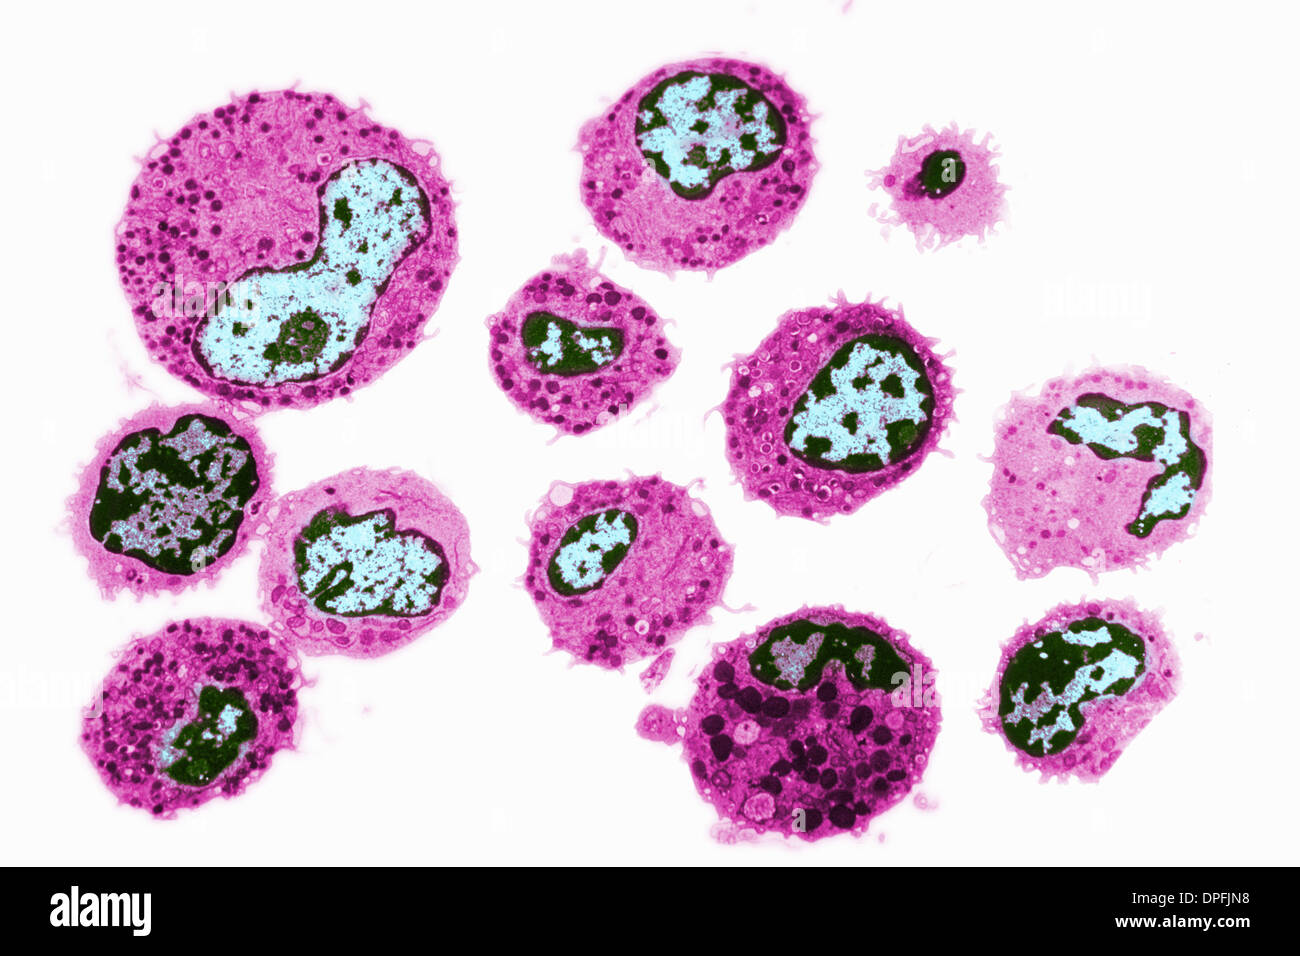 human white blood cells (WBCs), or leukocytes Stock Photo